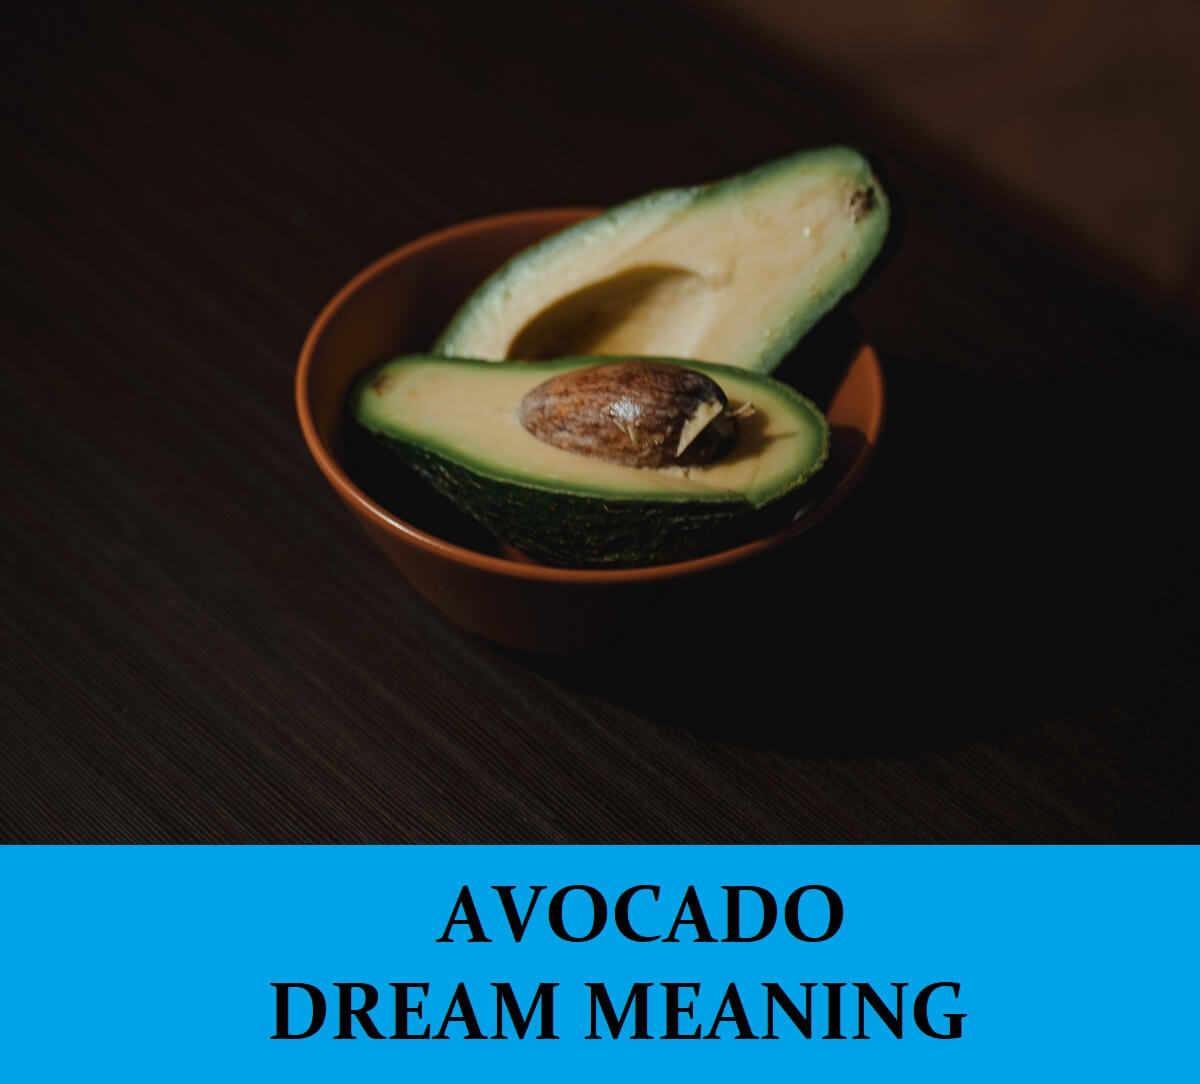 Dream About Avocados